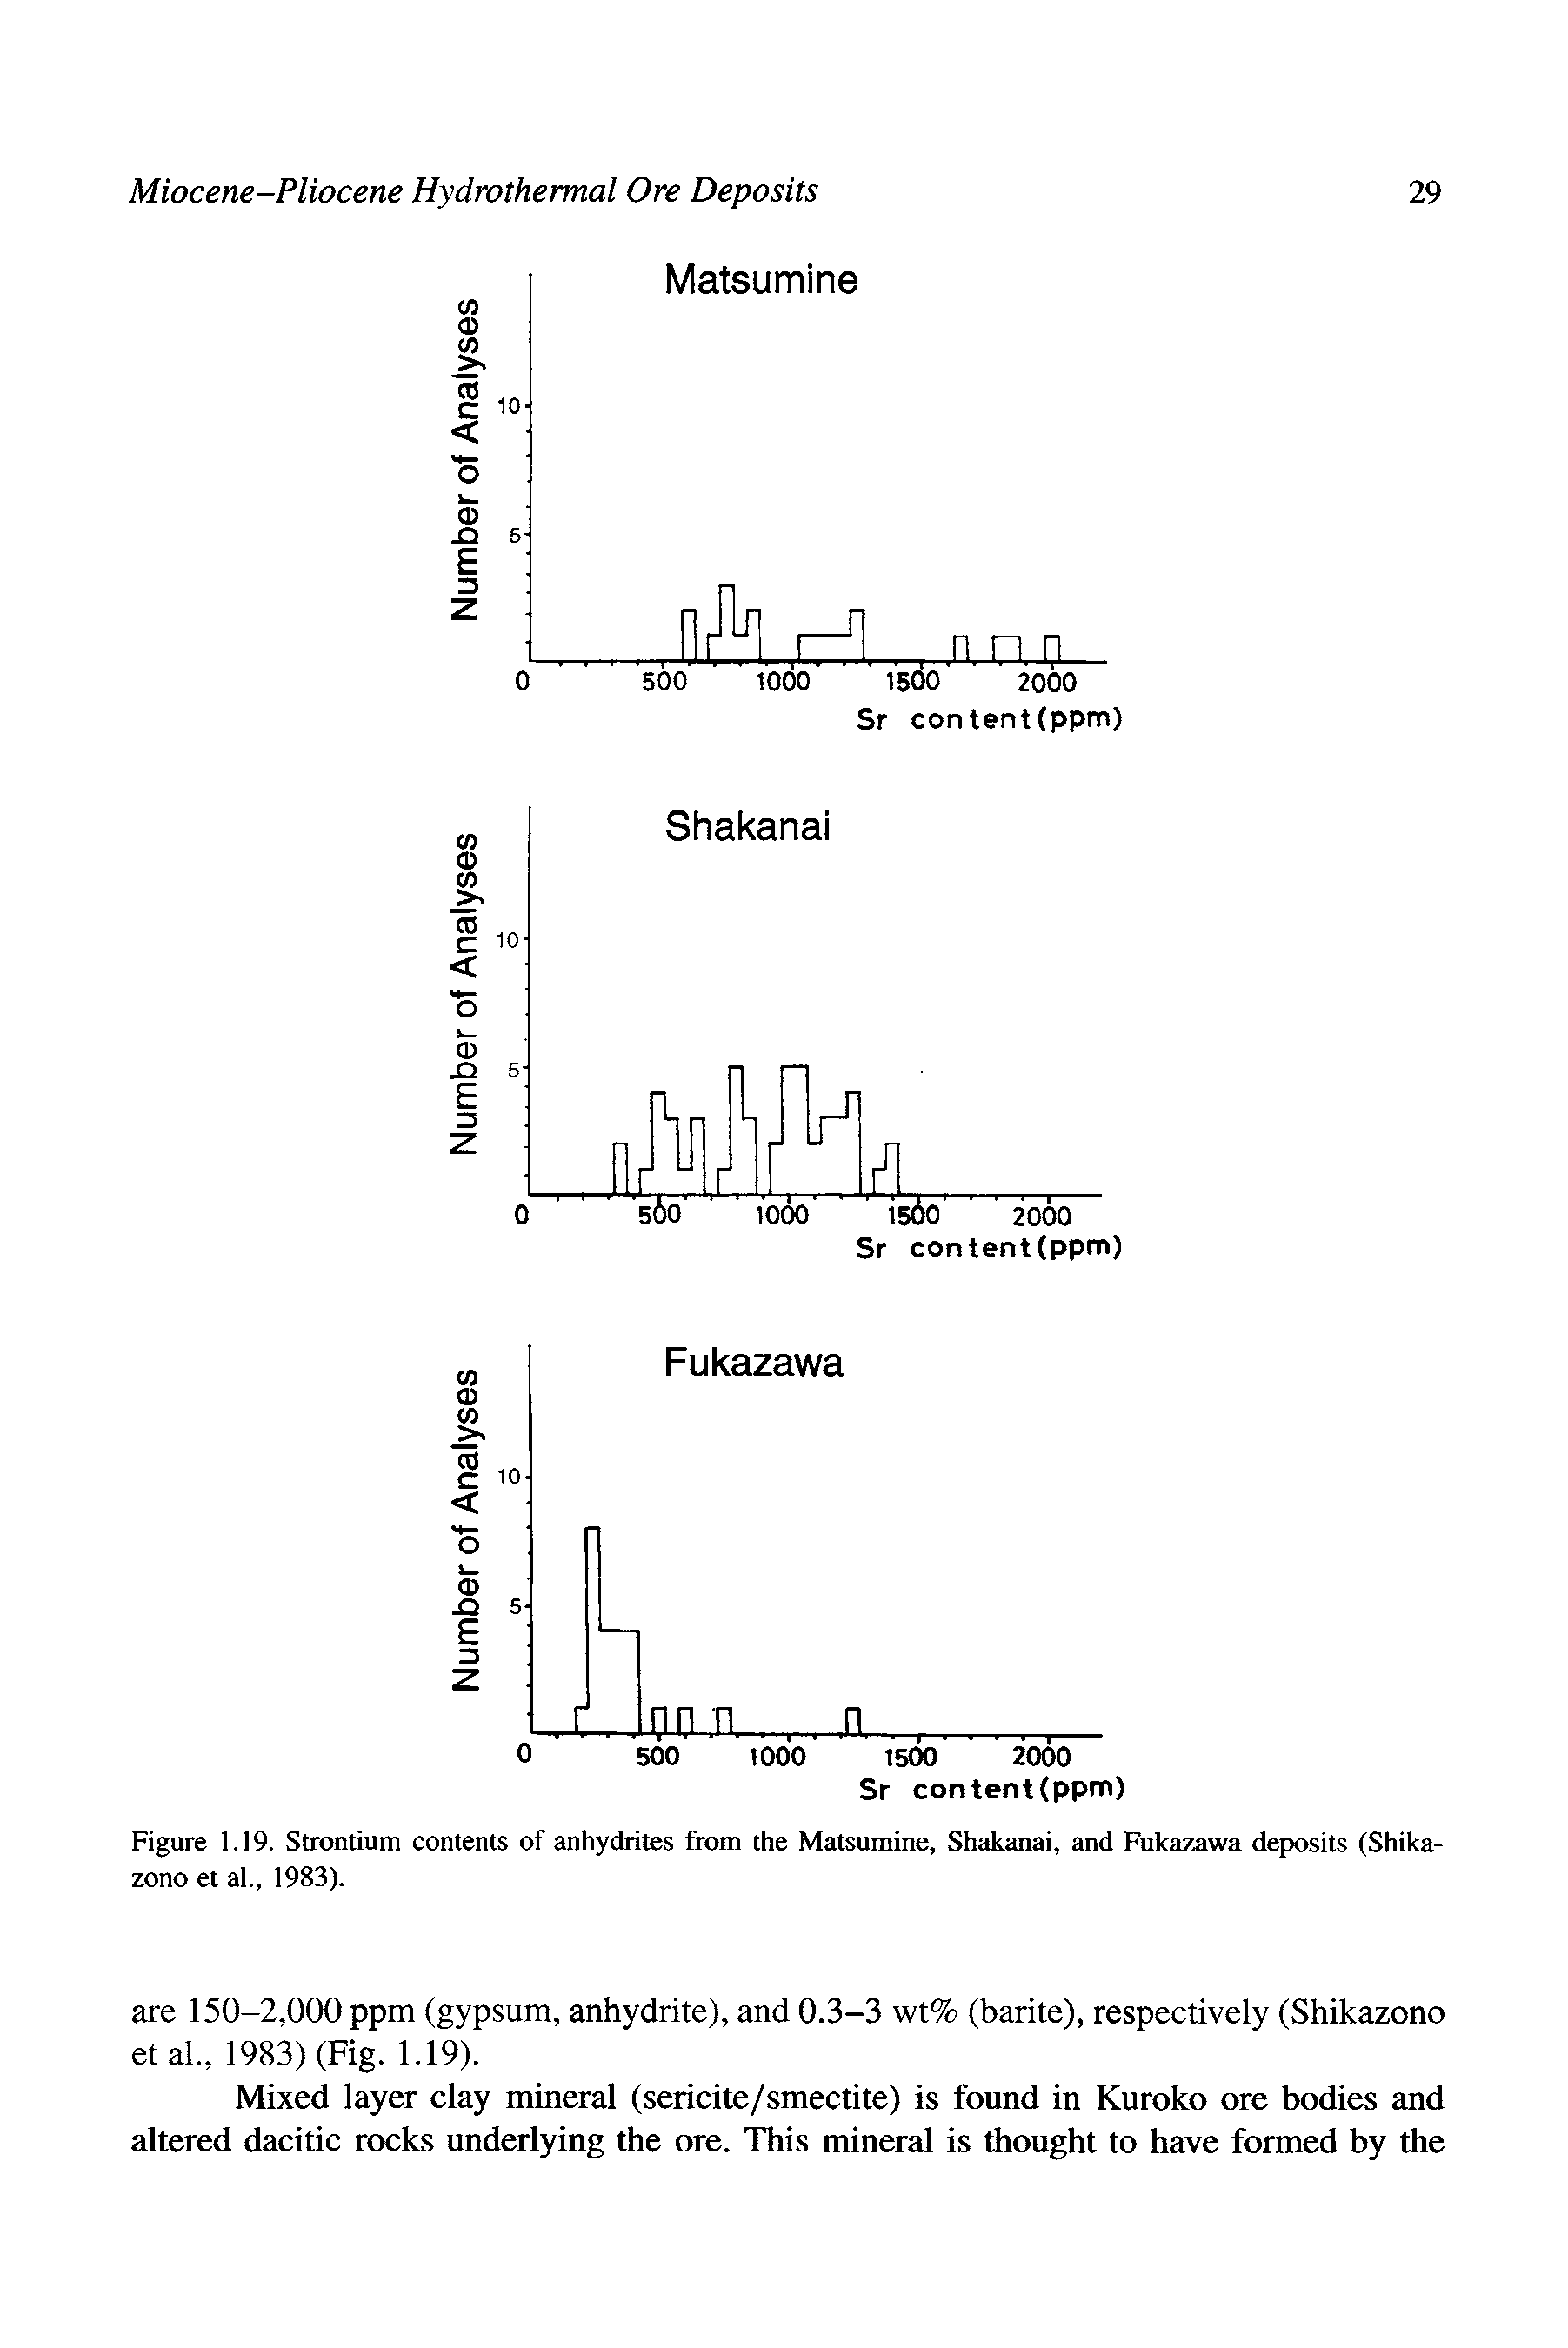 Figure 1.19. Strontium contents of anhydrites from the Matsumine, Shakanai, and Fukazawa deposits (Shika-zono et al., 1983).